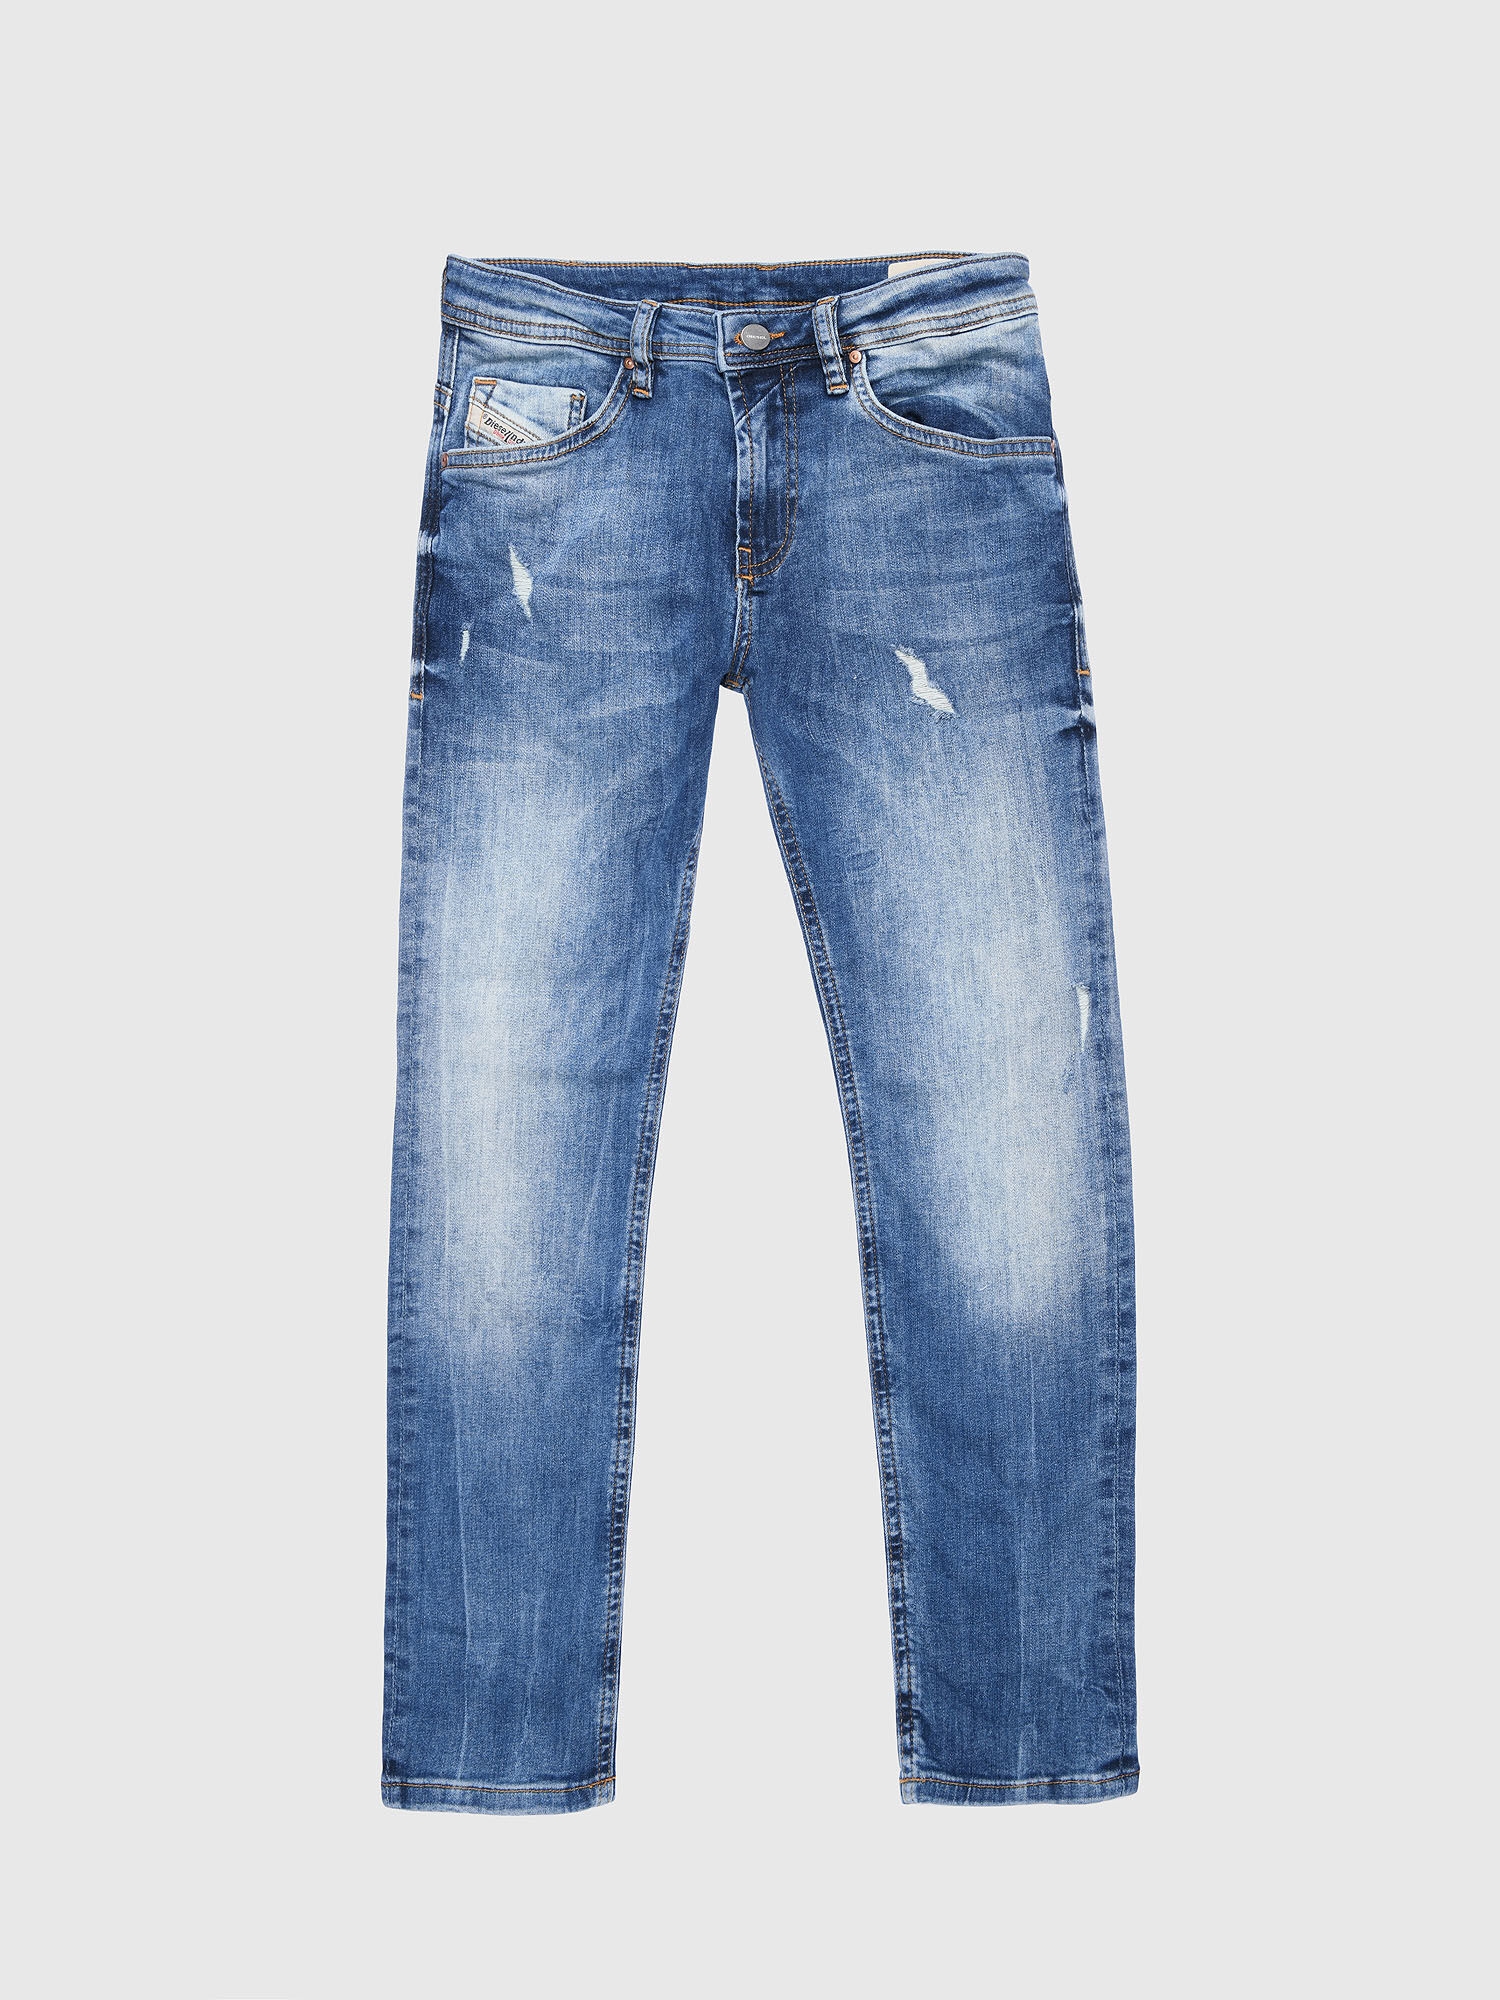 Diesel - THOMMER-J, Blue Jeans - Image 1